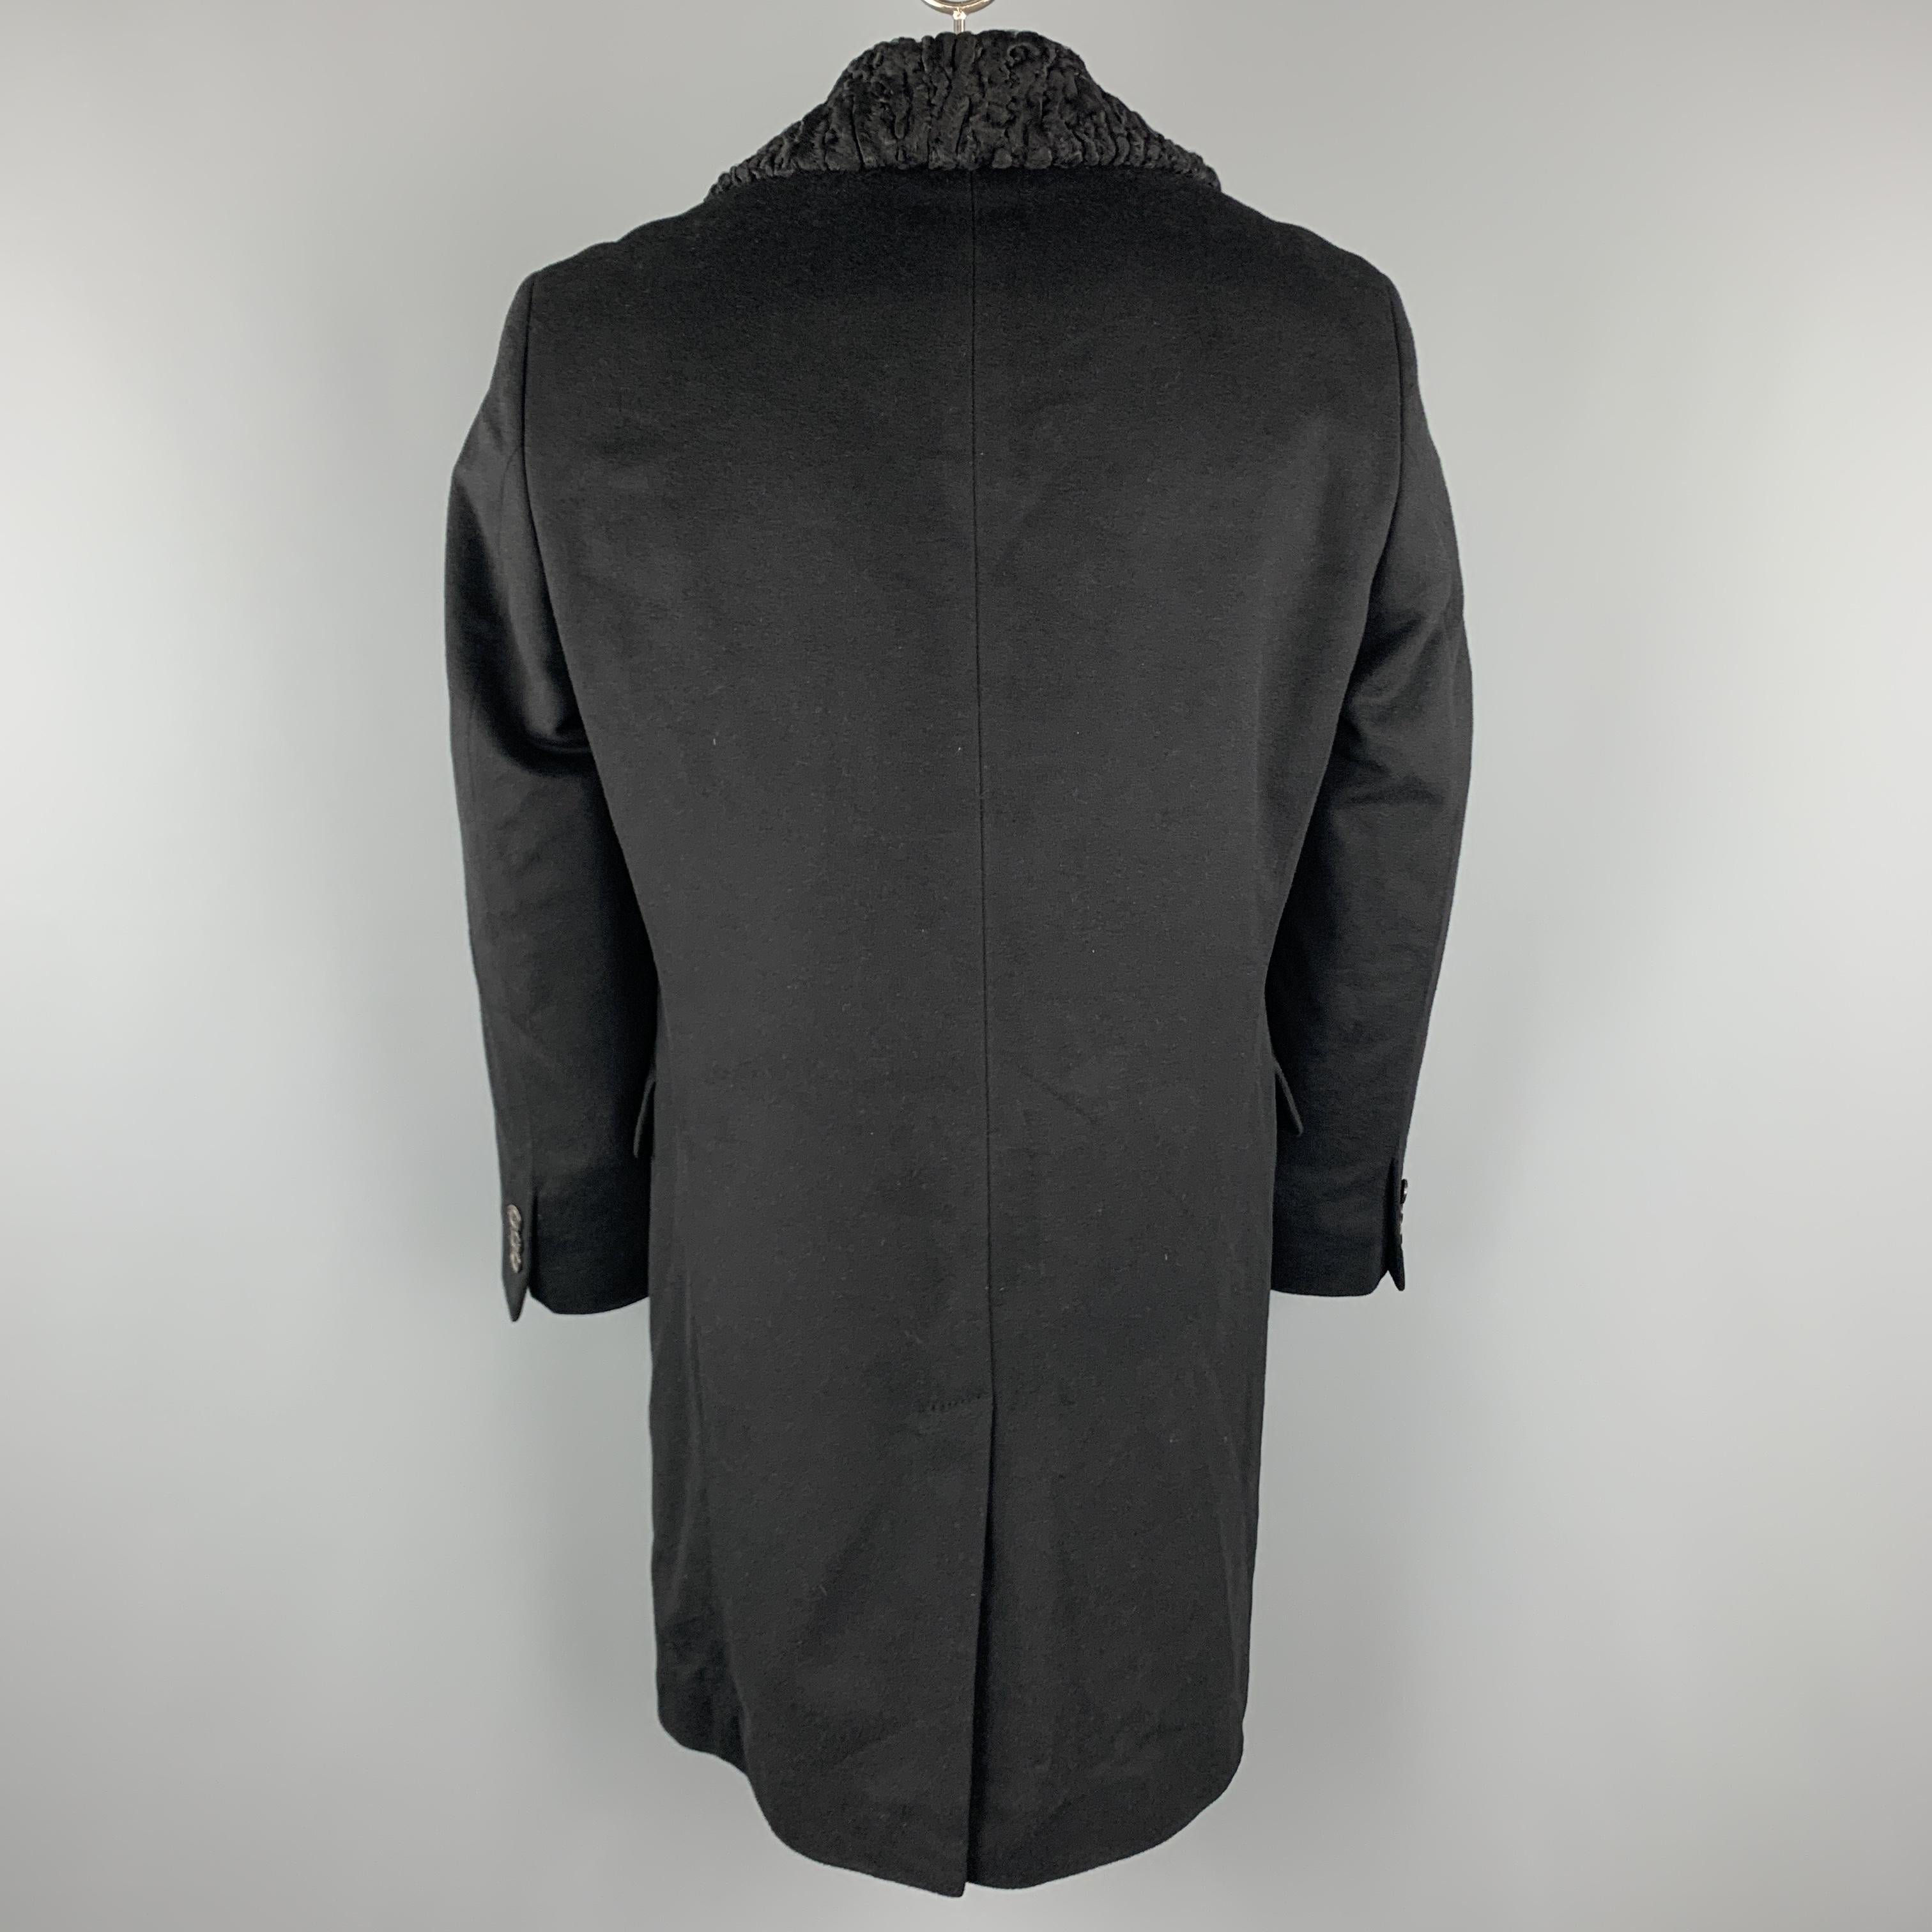 Men's HUGO BOSS Size 42 Black Wool Blend Hidden Placket Fur Collar Coat